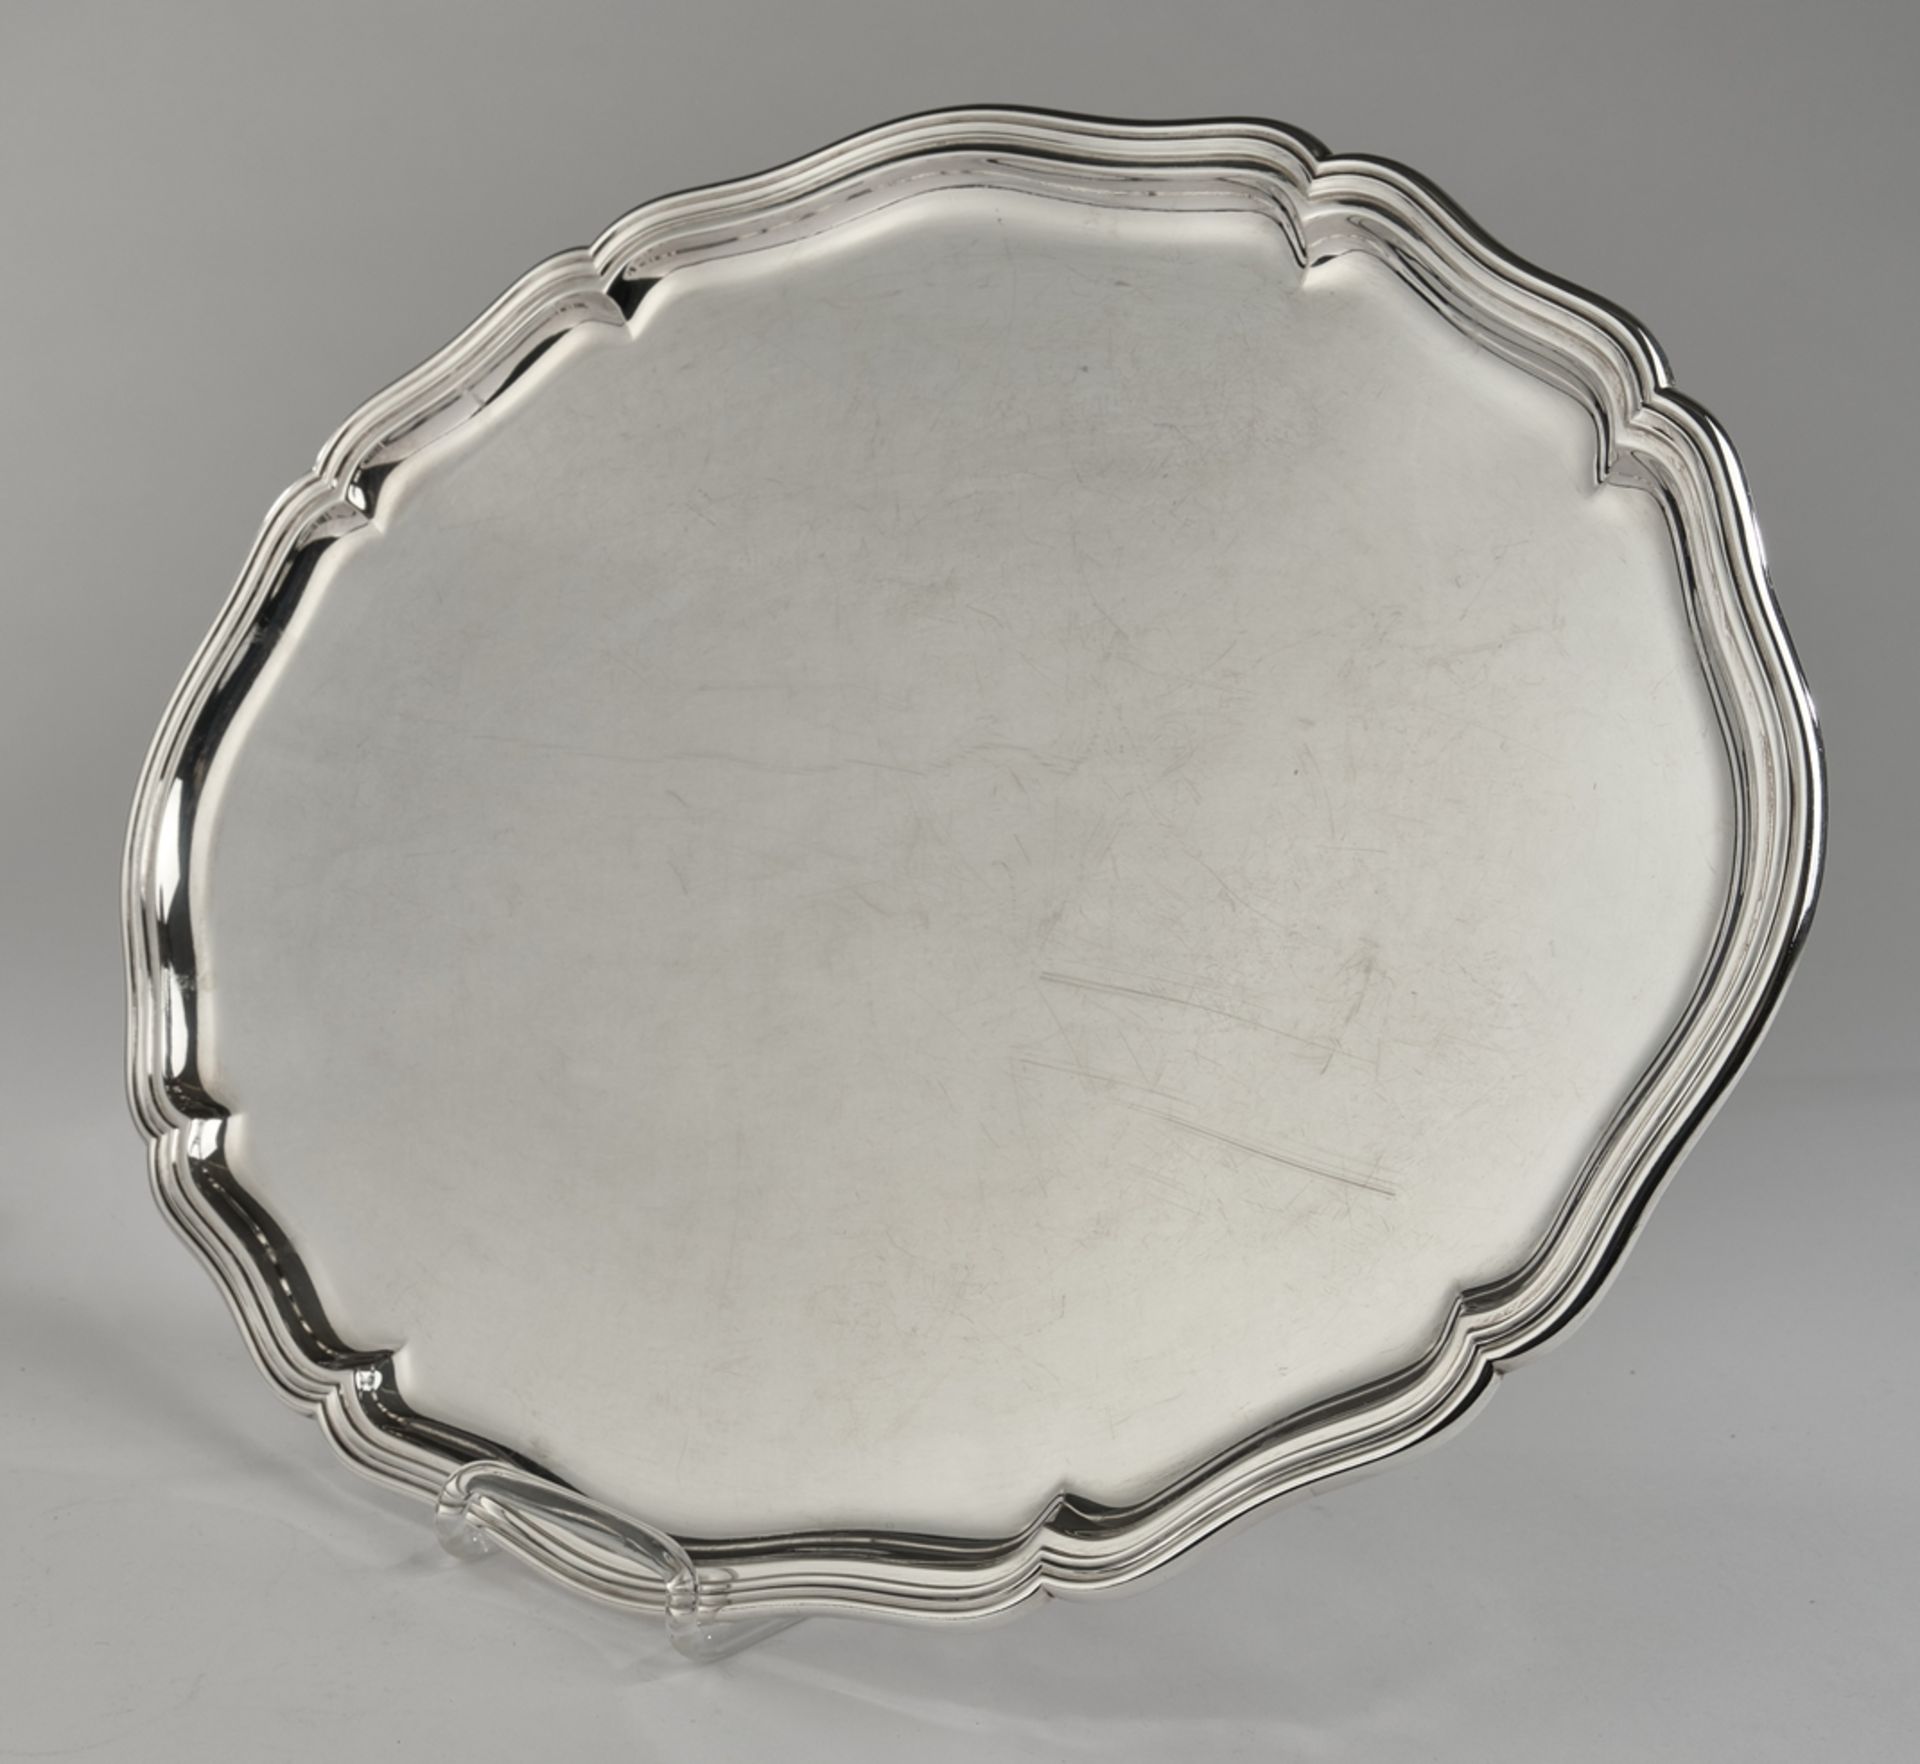 Vorlegeplatte, Silber 835, Bruckmann, oval, passig-geschweifter Profilrand, 45.5 x 35 cm, ca. 1.290